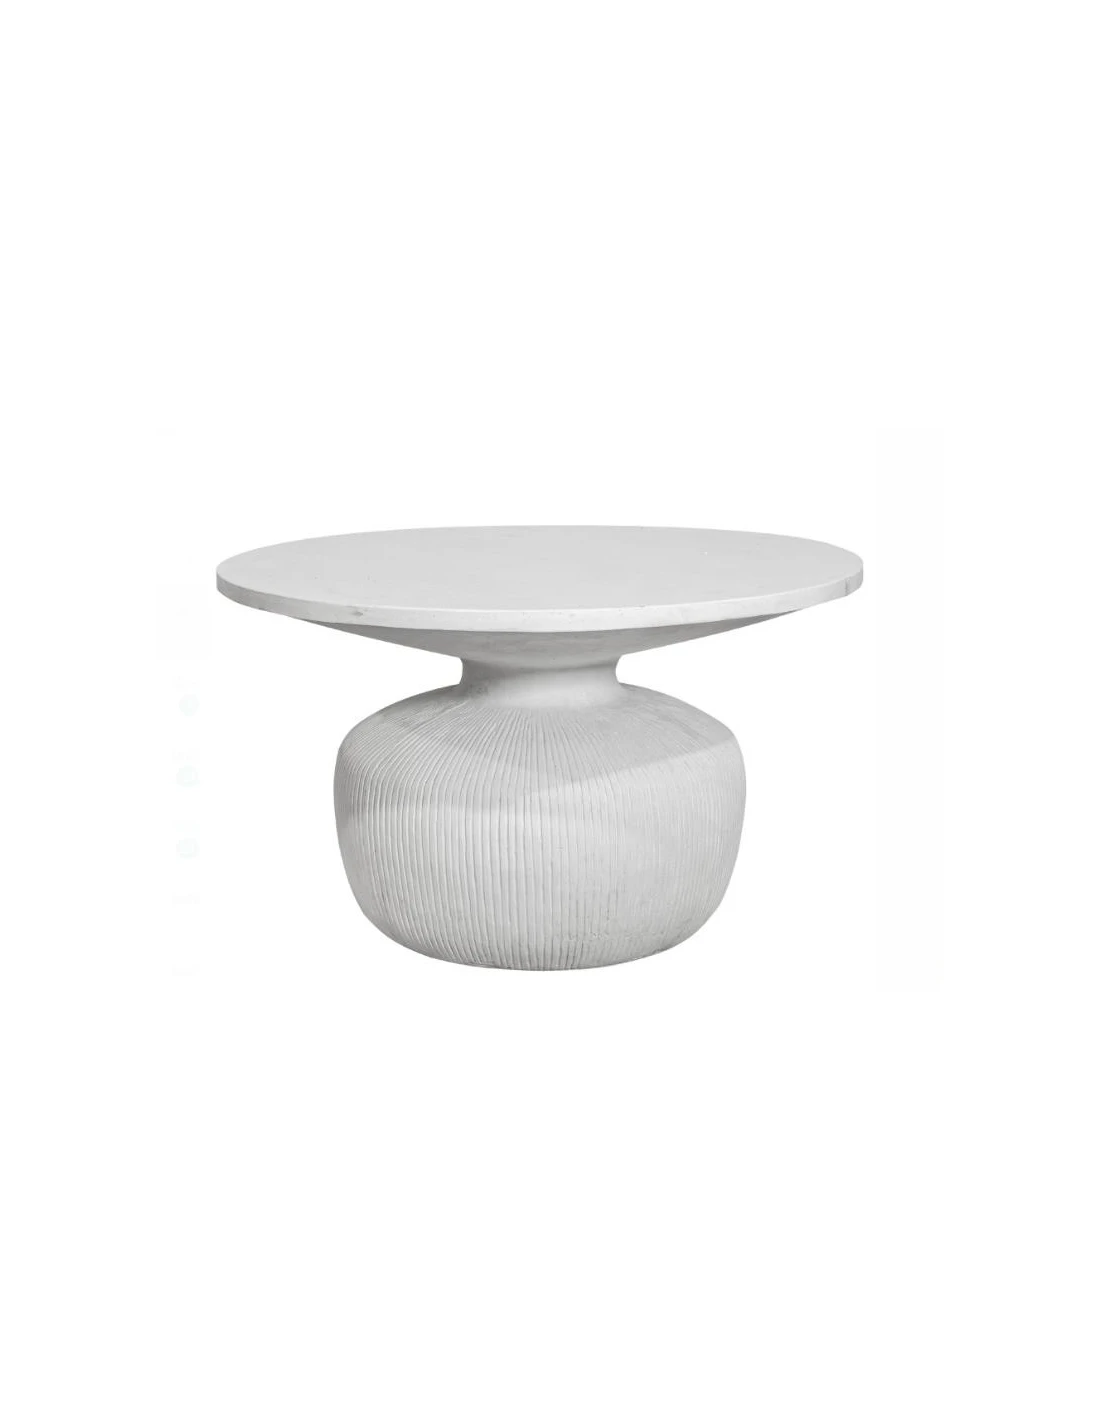 Coffee table Akmalia round 78cm white cement